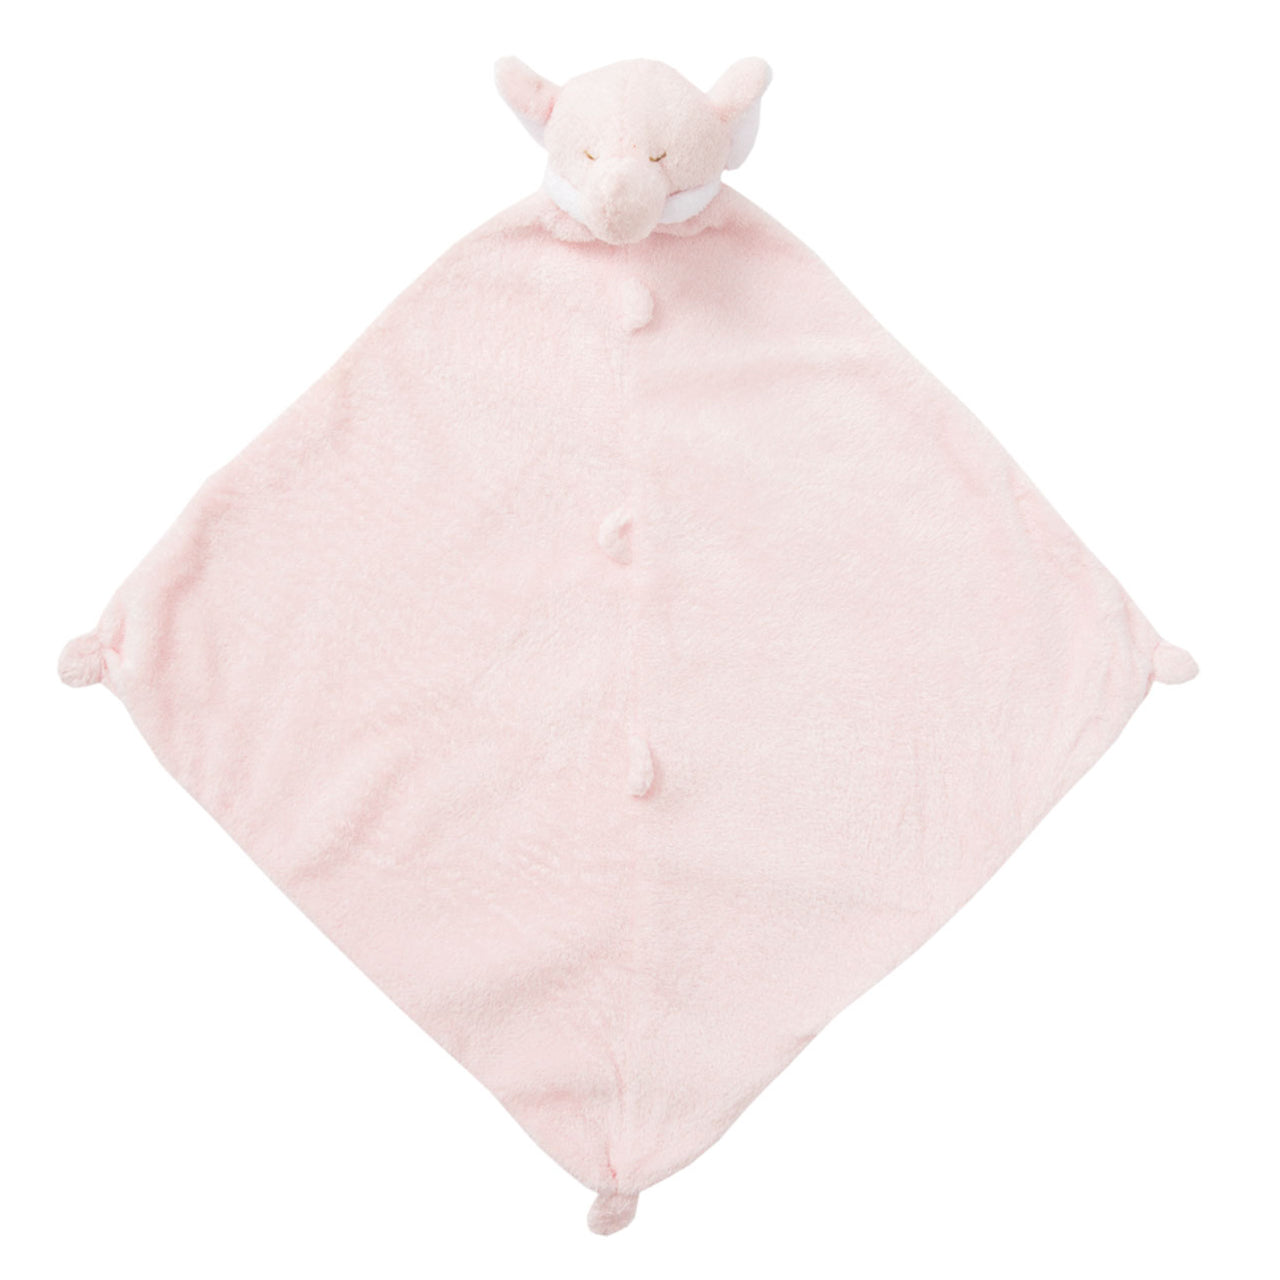 Personalized Pink Elephant Baby Lovie Blankie - Give Wink